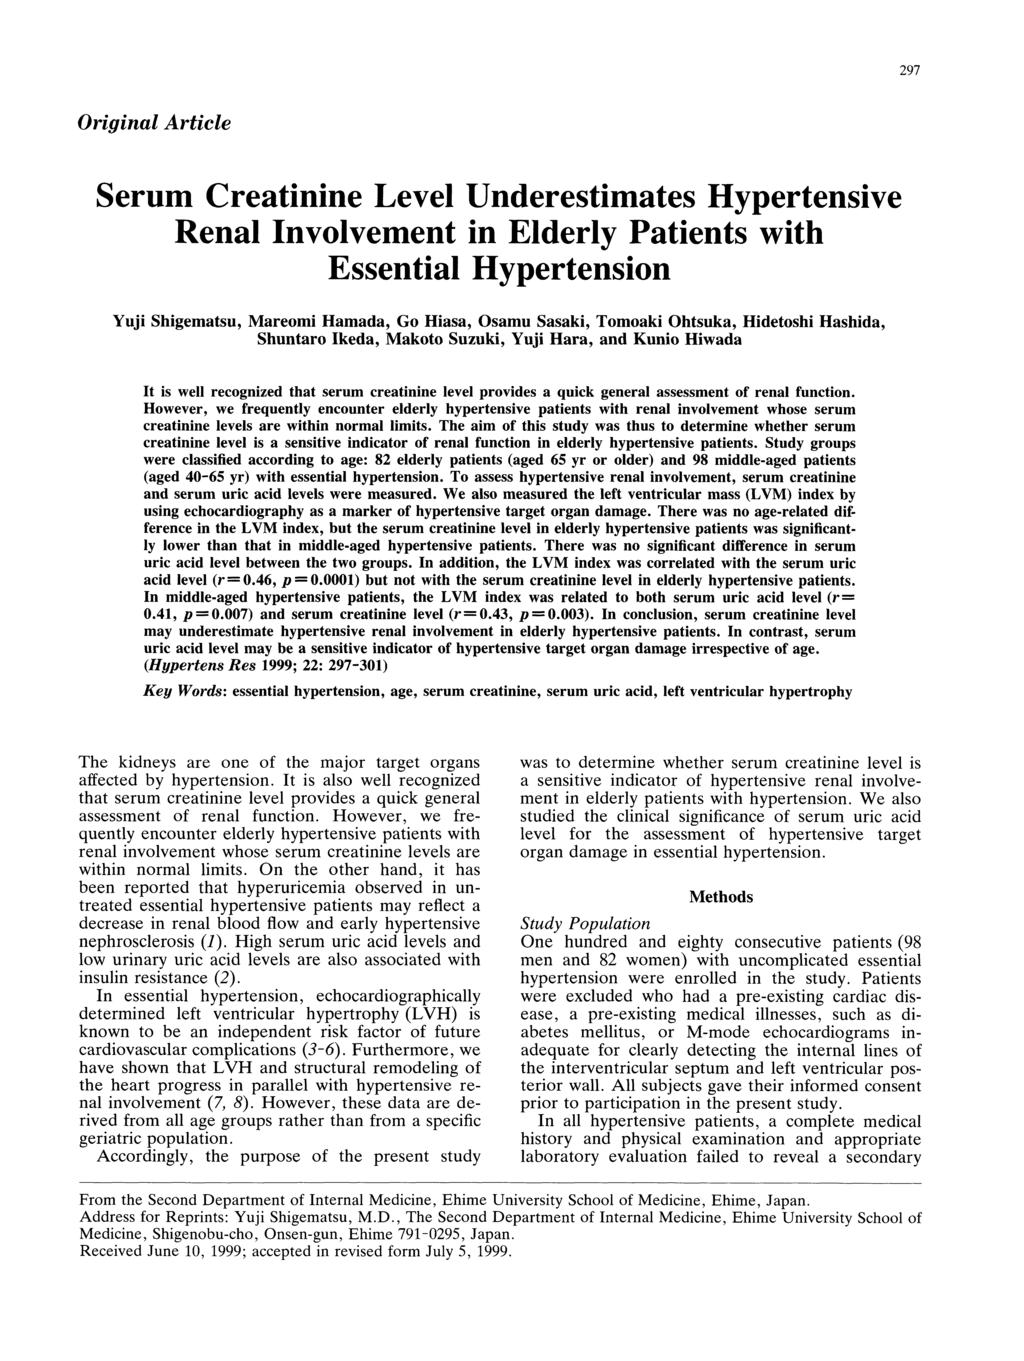 297 Original Article Serum Creatinine Level Renal Involvement Essential Underestimates Hypertensive in Elderly Patients with Hypertension Yuji Shigematsu, Mareomi Hamada, Go Hiasa, Osamu Sasaki,